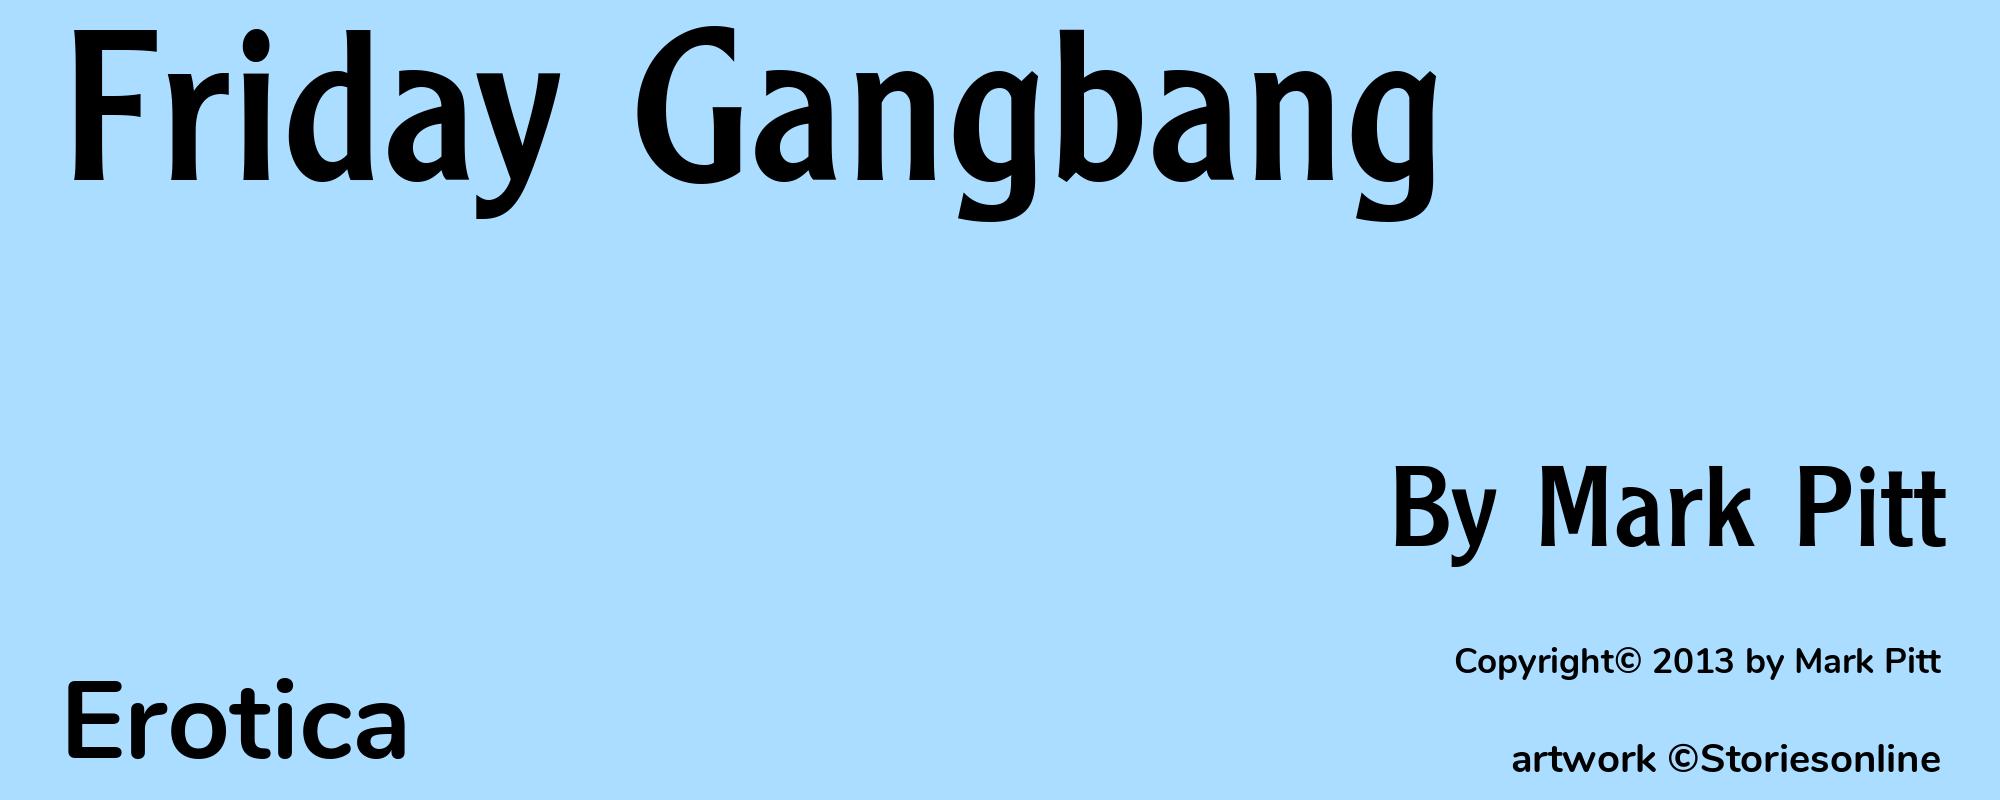 Friday Gangbang - Cover